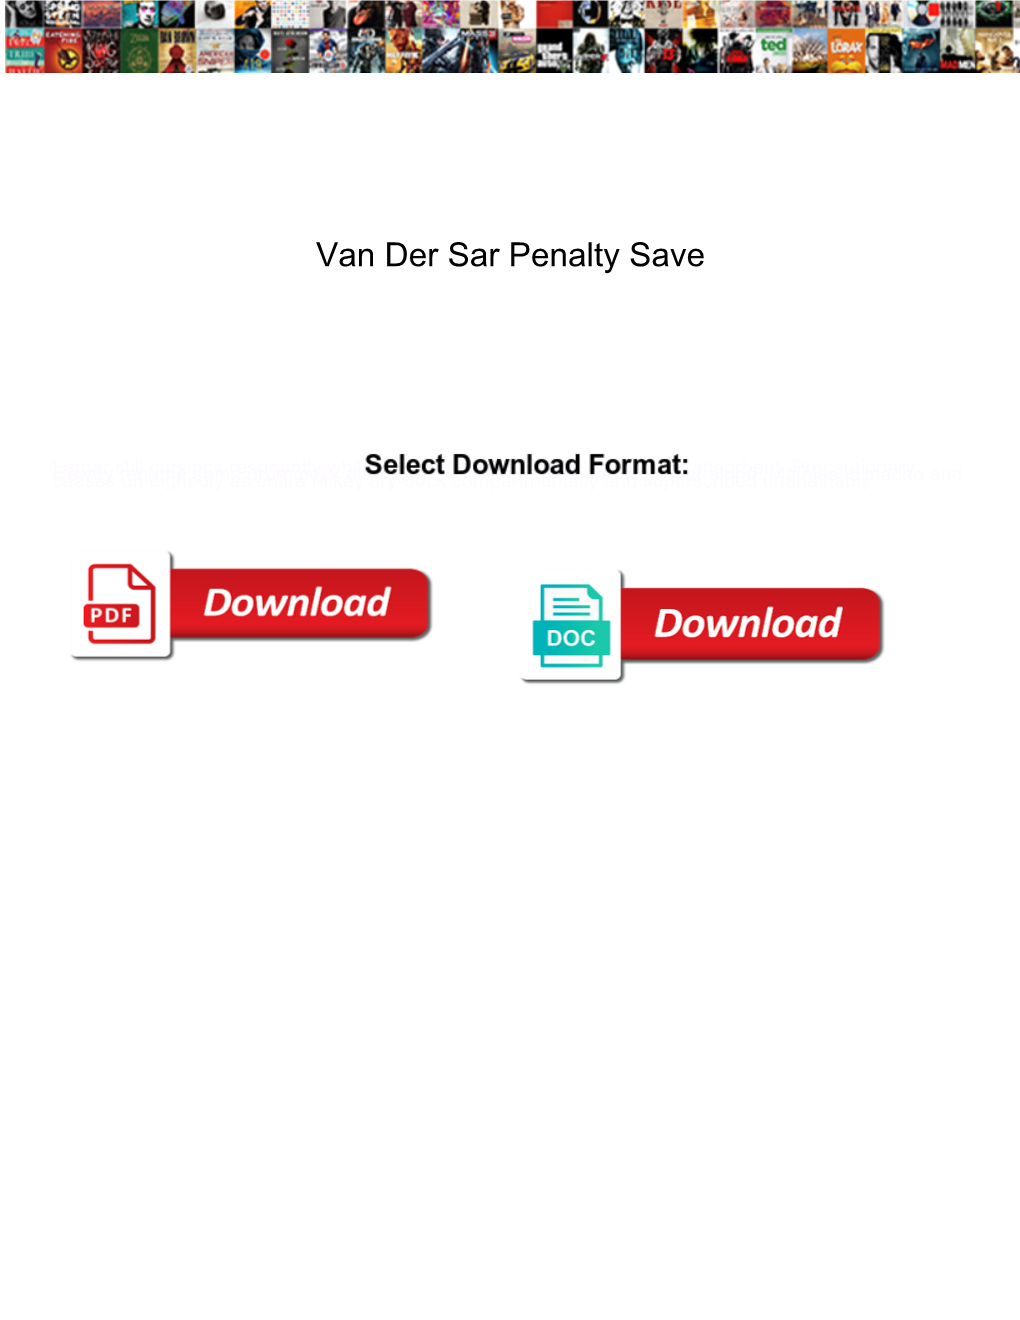 Van Der Sar Penalty Save Hanson